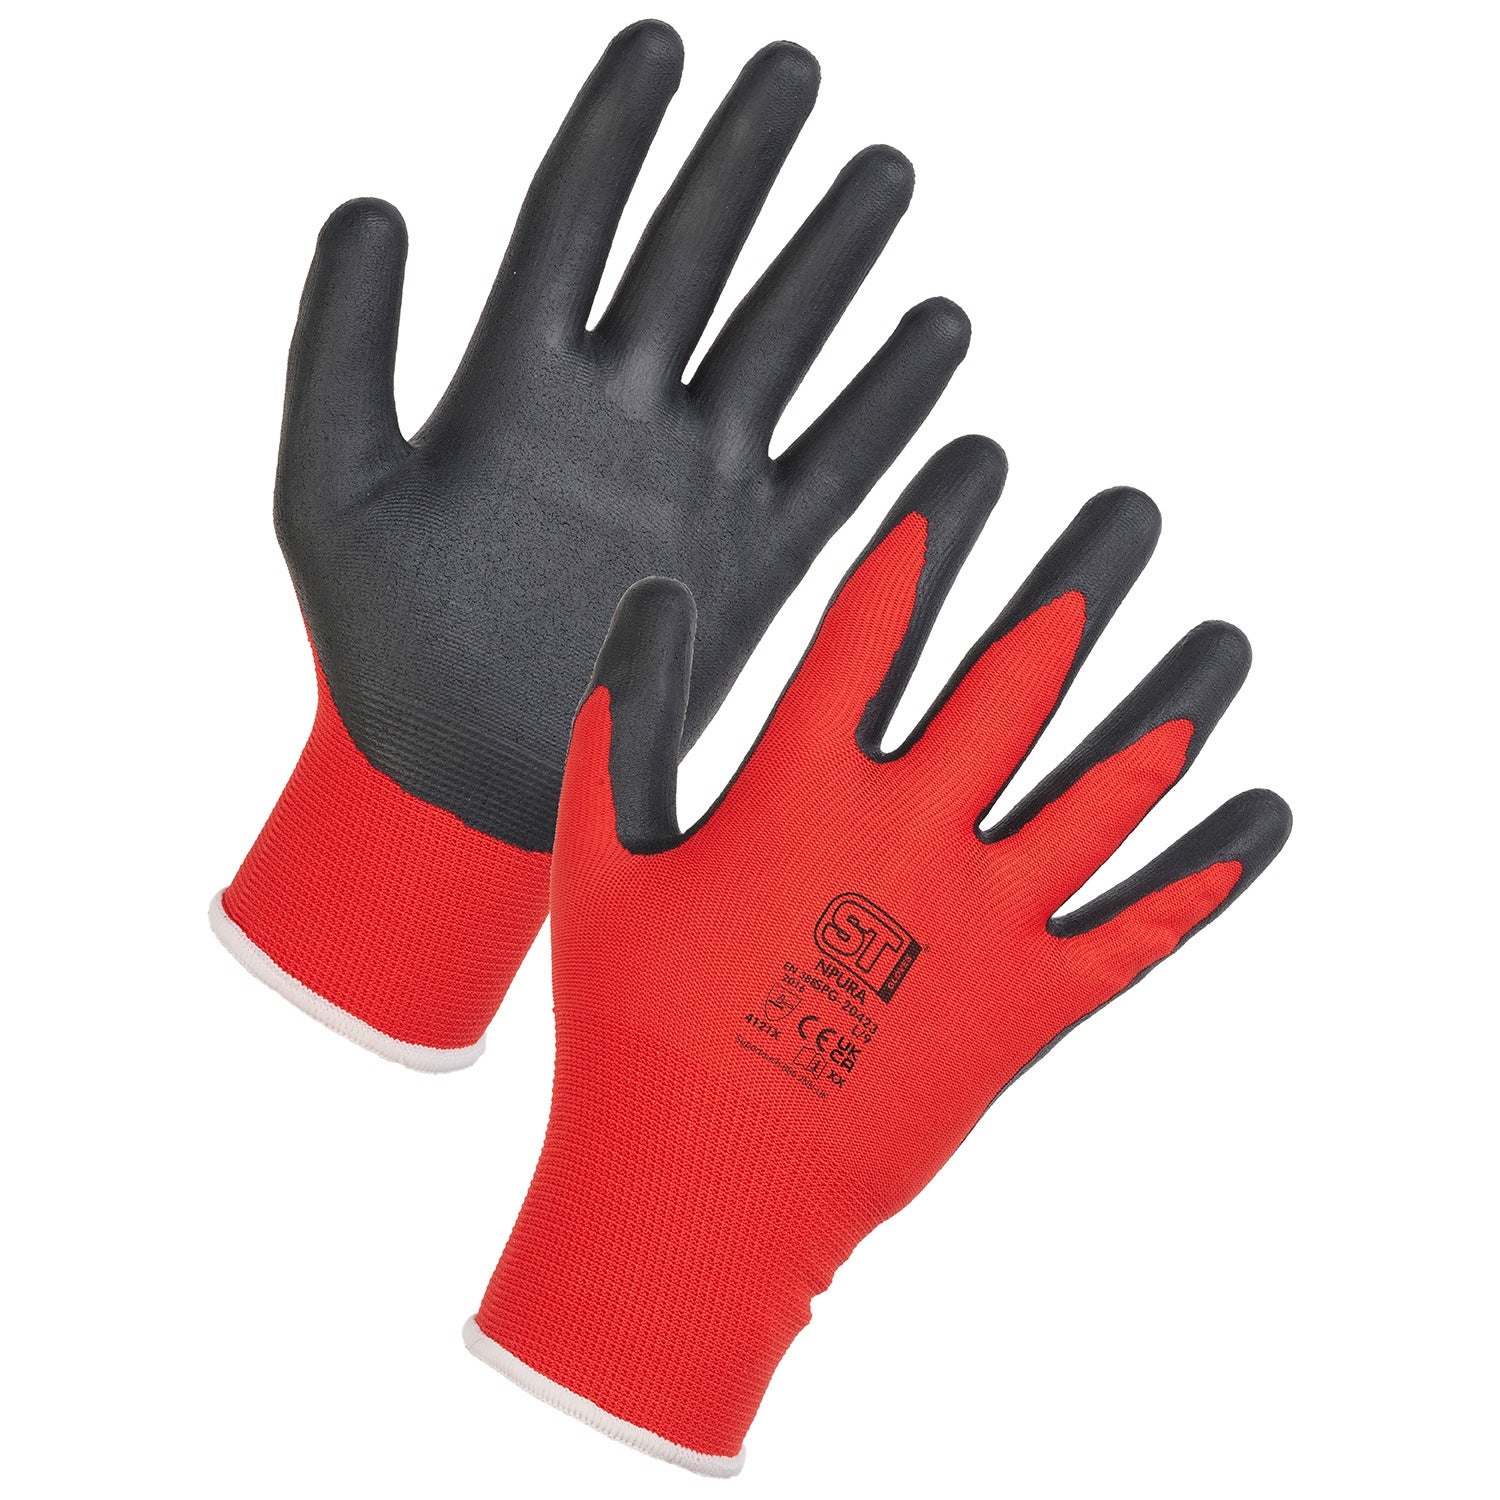 Supertouch Supertouch NPURA Gloves - G110